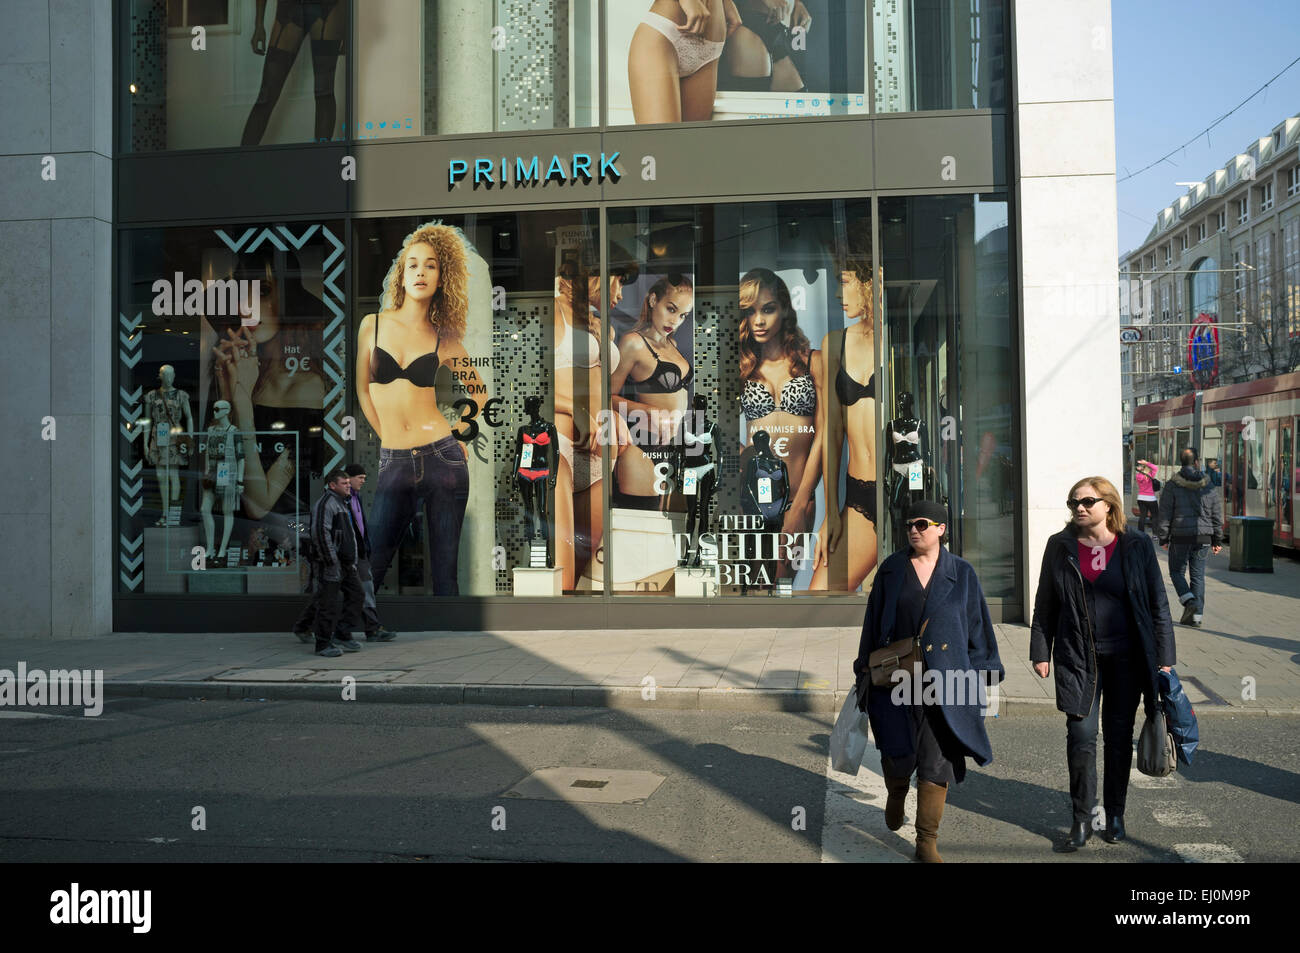 Primark clothes store Dusseldorf Germany Stock Photo - Alamy